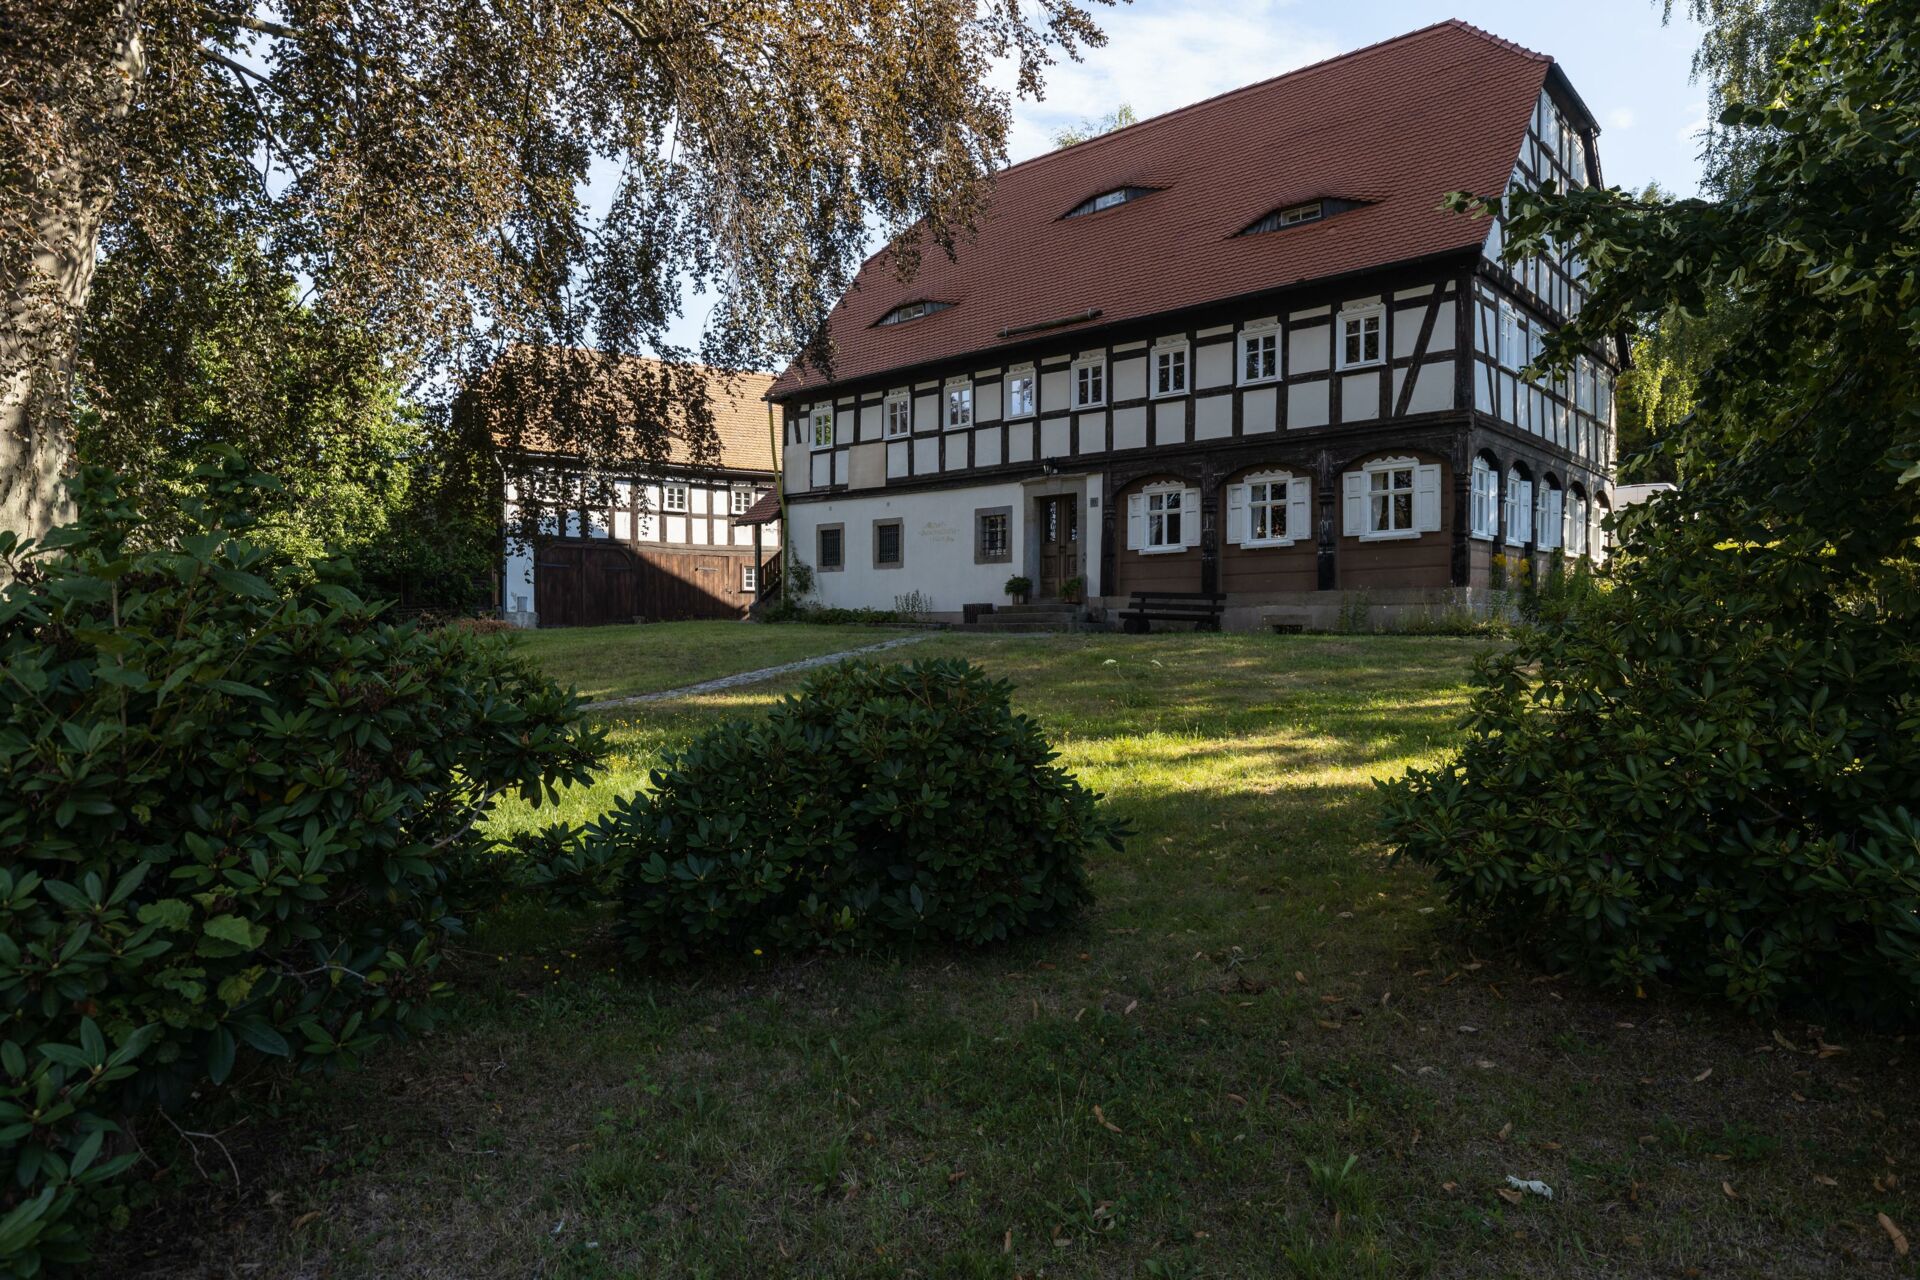 Oberlausitzer Fachwerkhaus in Obercunnersdorf - Foto: Mario Kegel - photok